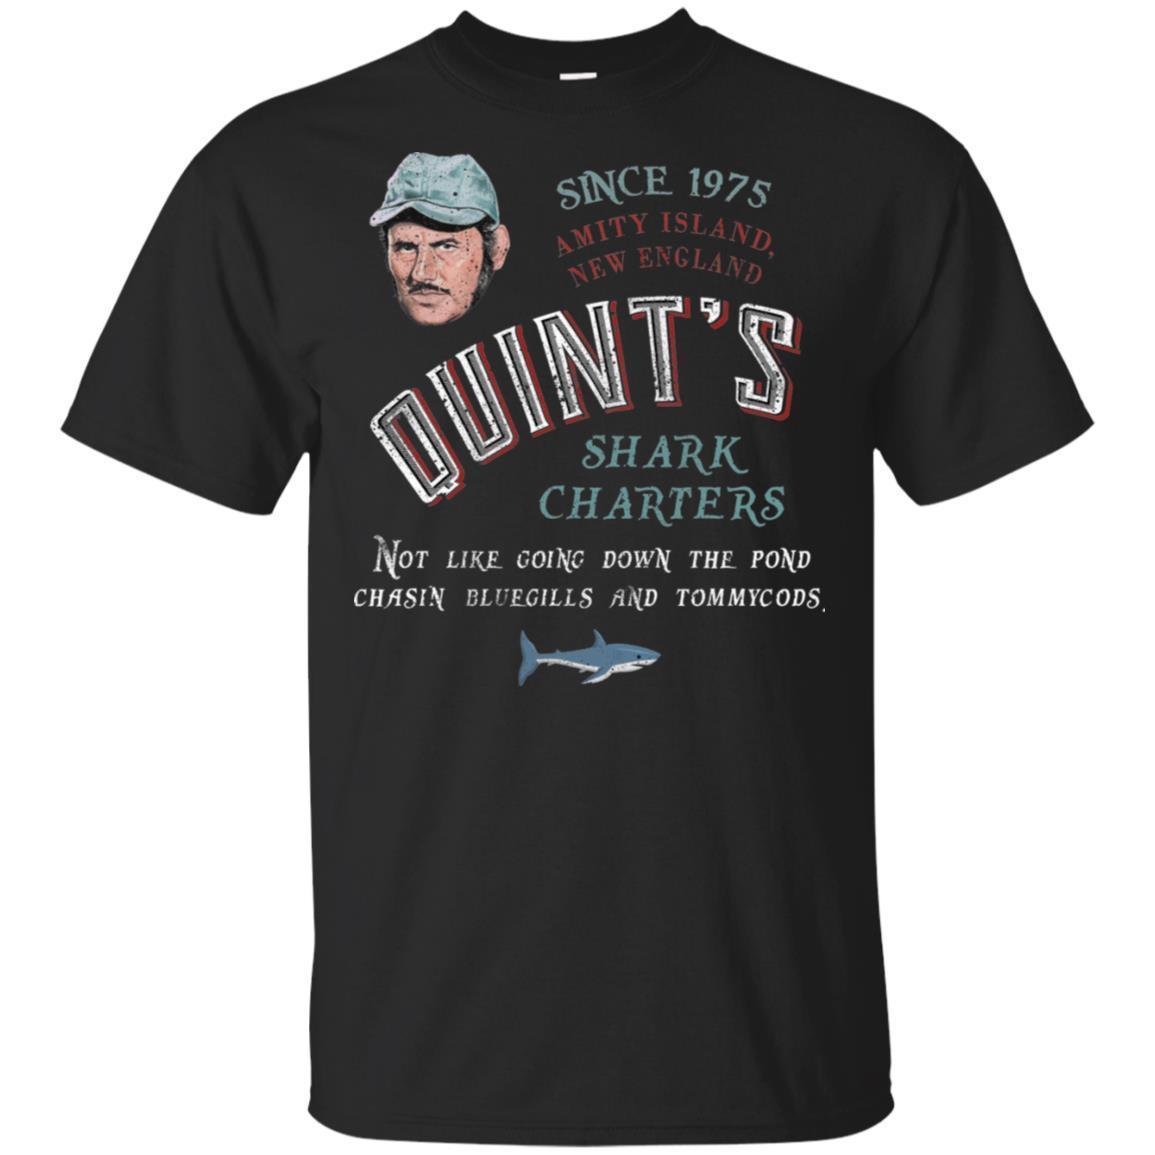 Since 1975 Amity Island New England Quint s Shark Charters T-Shirt